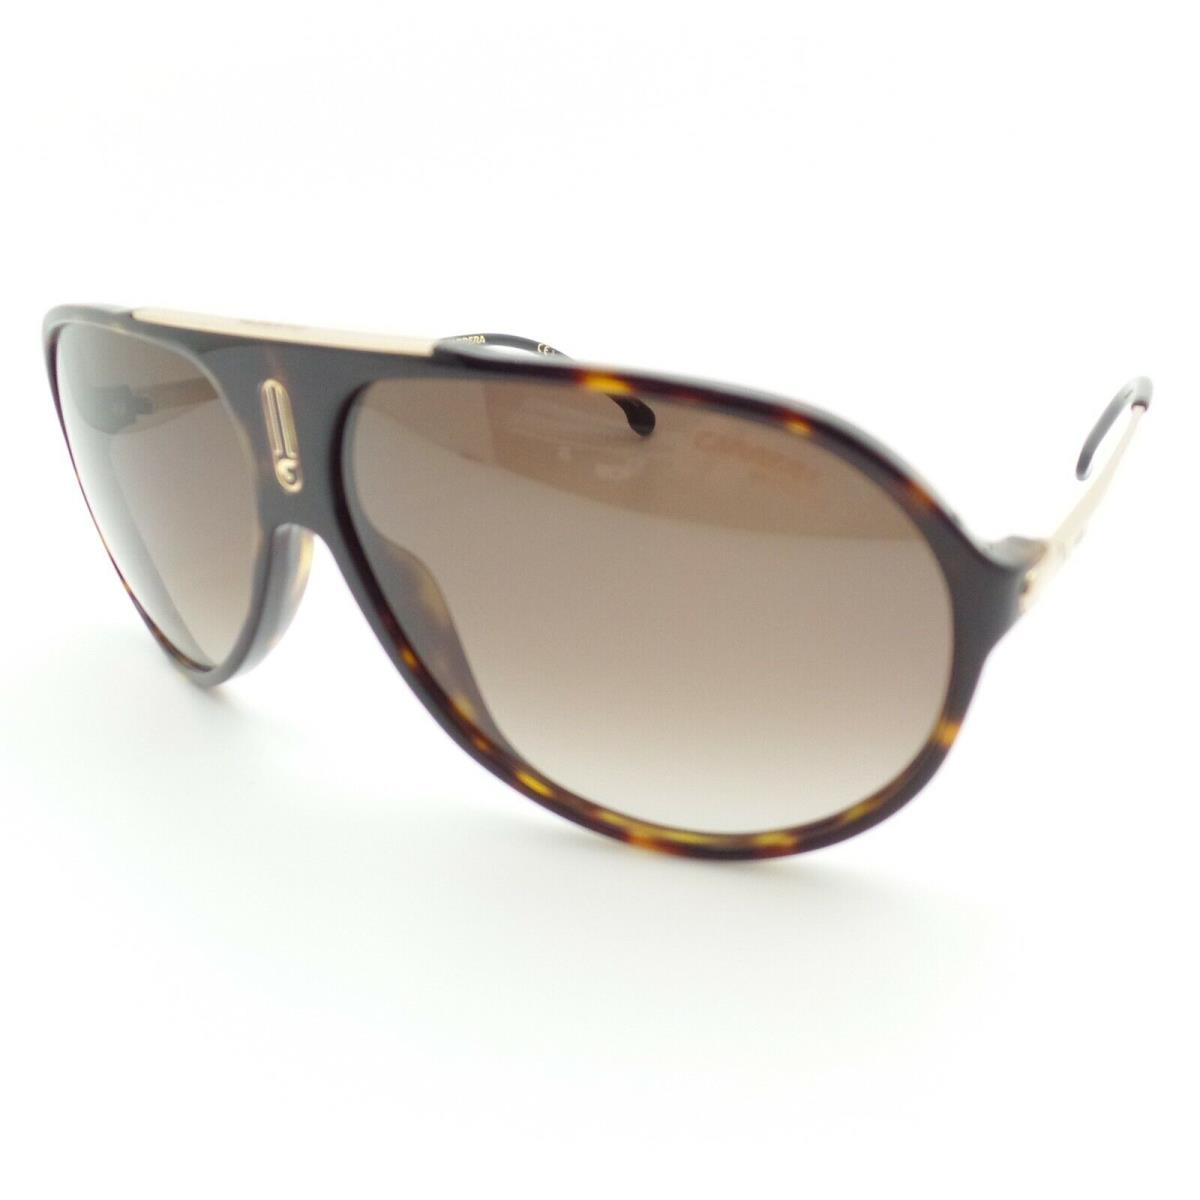 Carrera Hot 65 086HA Dark Havana Brown Fade Sunglasses - Frame: Dark Havana Gold, Lens: Brown Fade